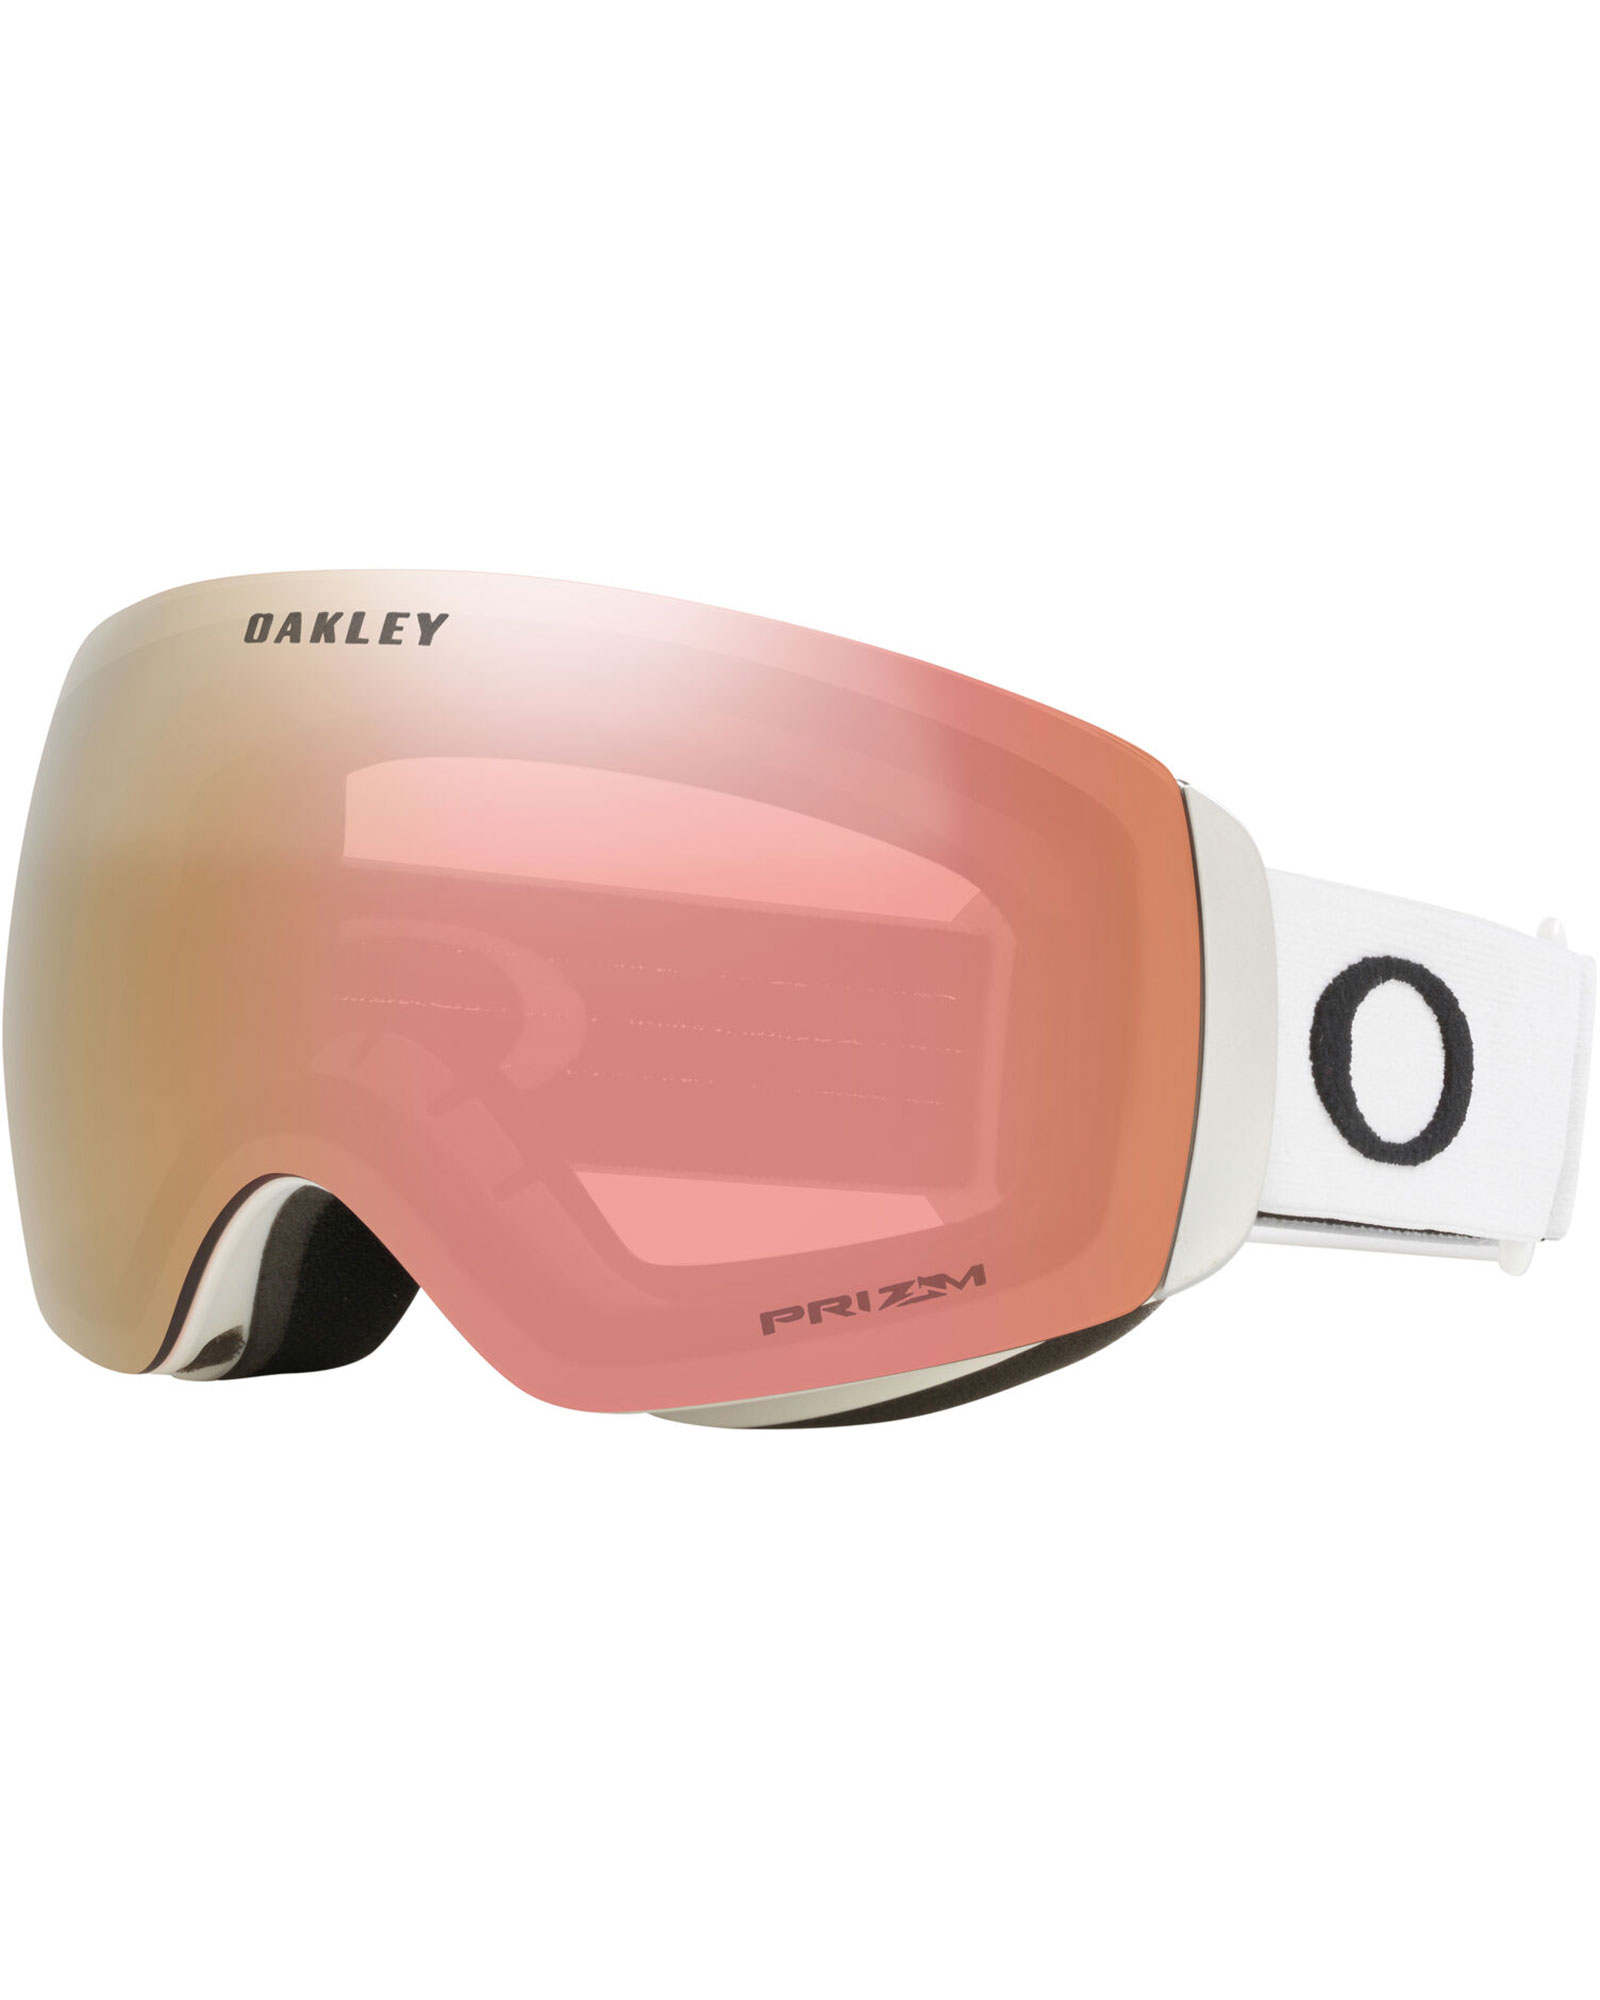 Oakley Flight Deck M Matte White / Prizm Rose Gold Iridium Goggles 0